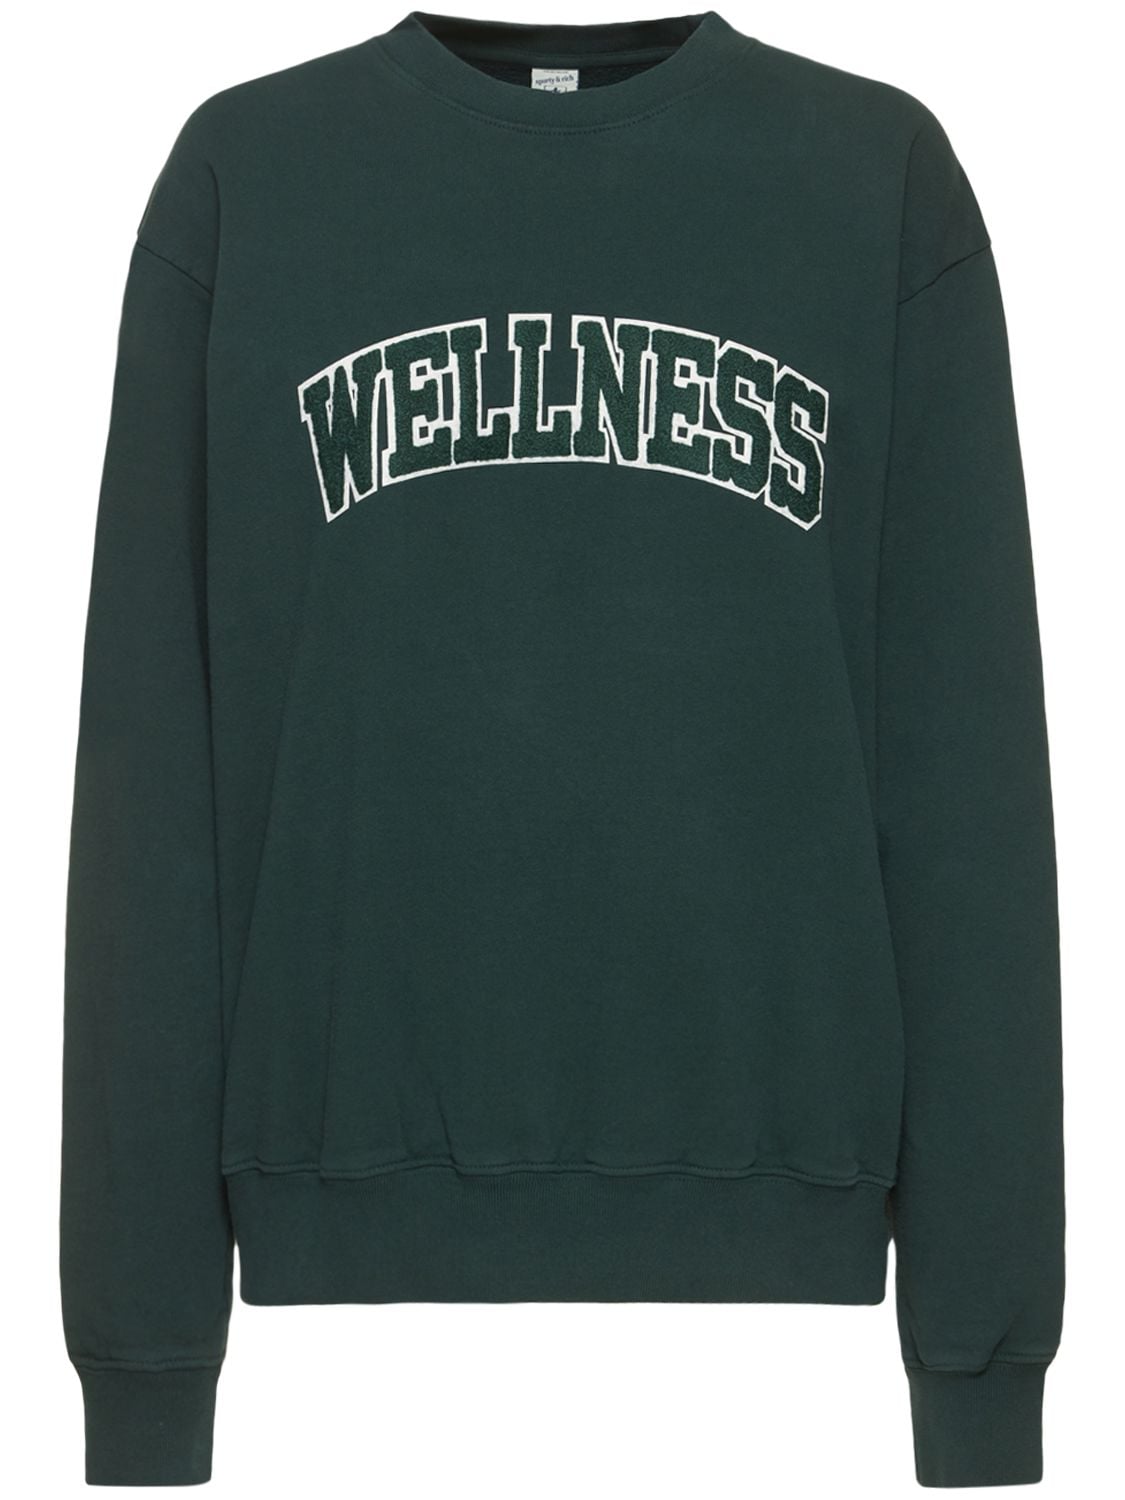 Wellness Bouclé Patch Sweatshirt